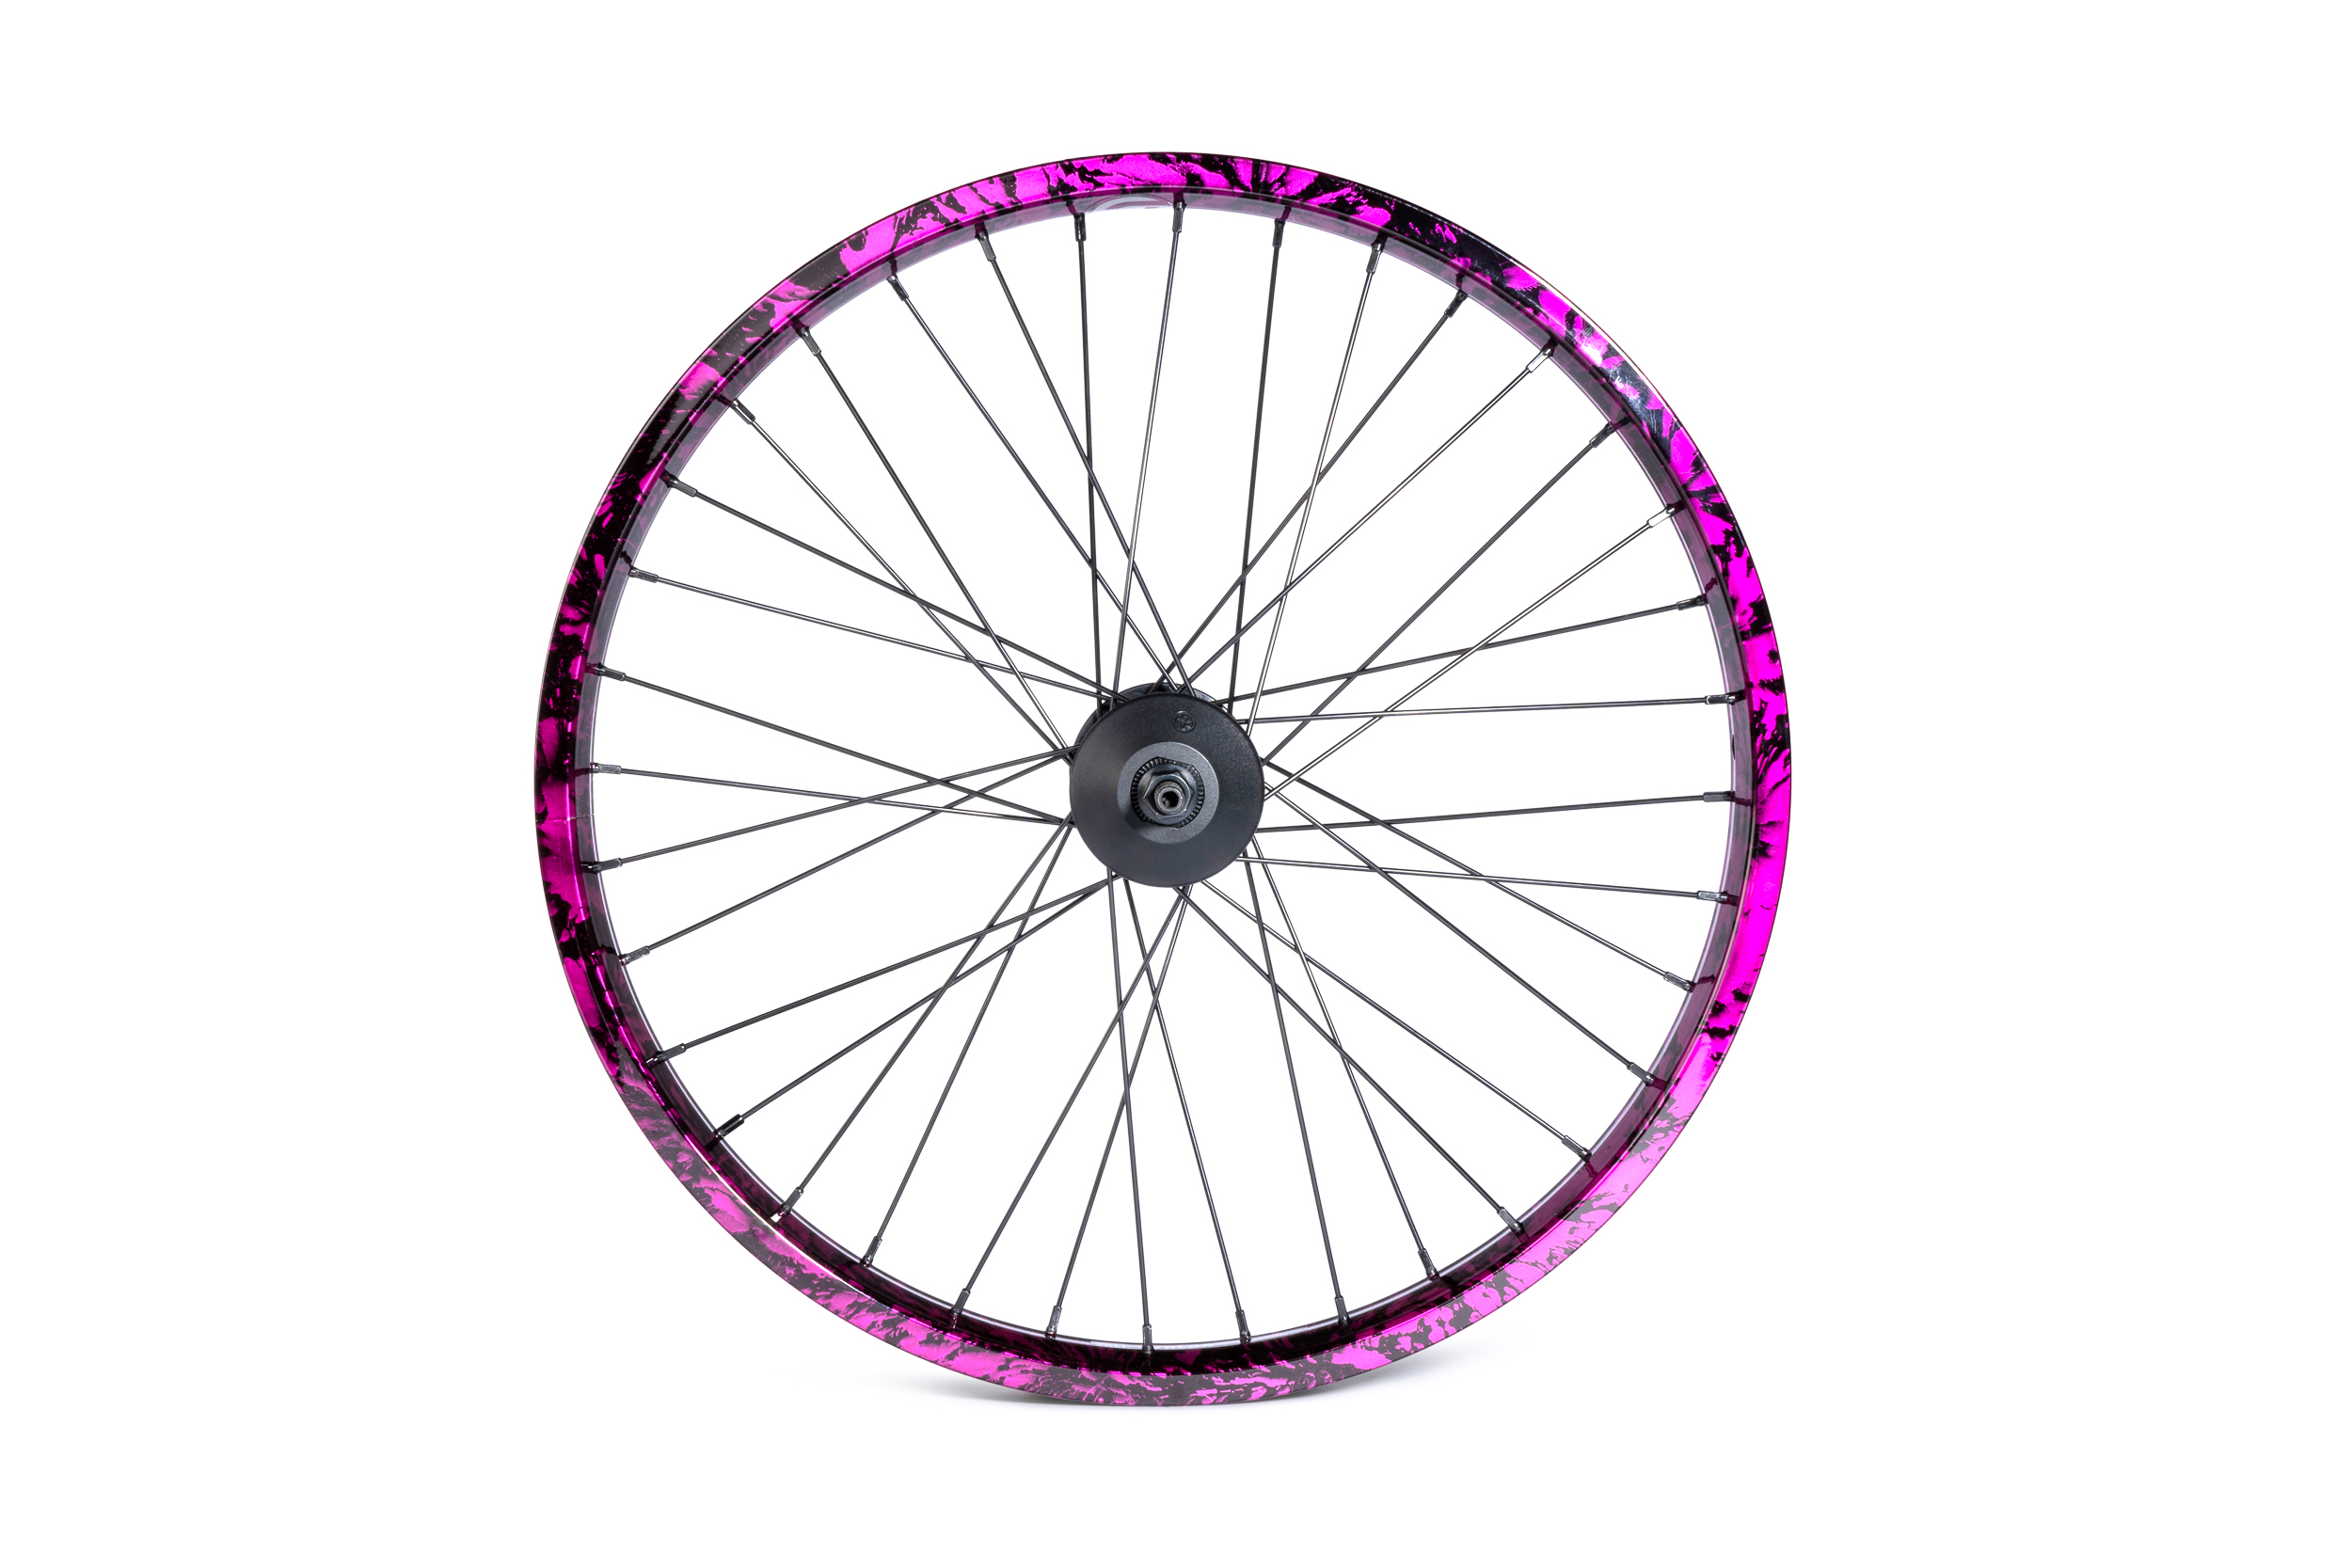 Salt EX Front Wheel Purple Splatter